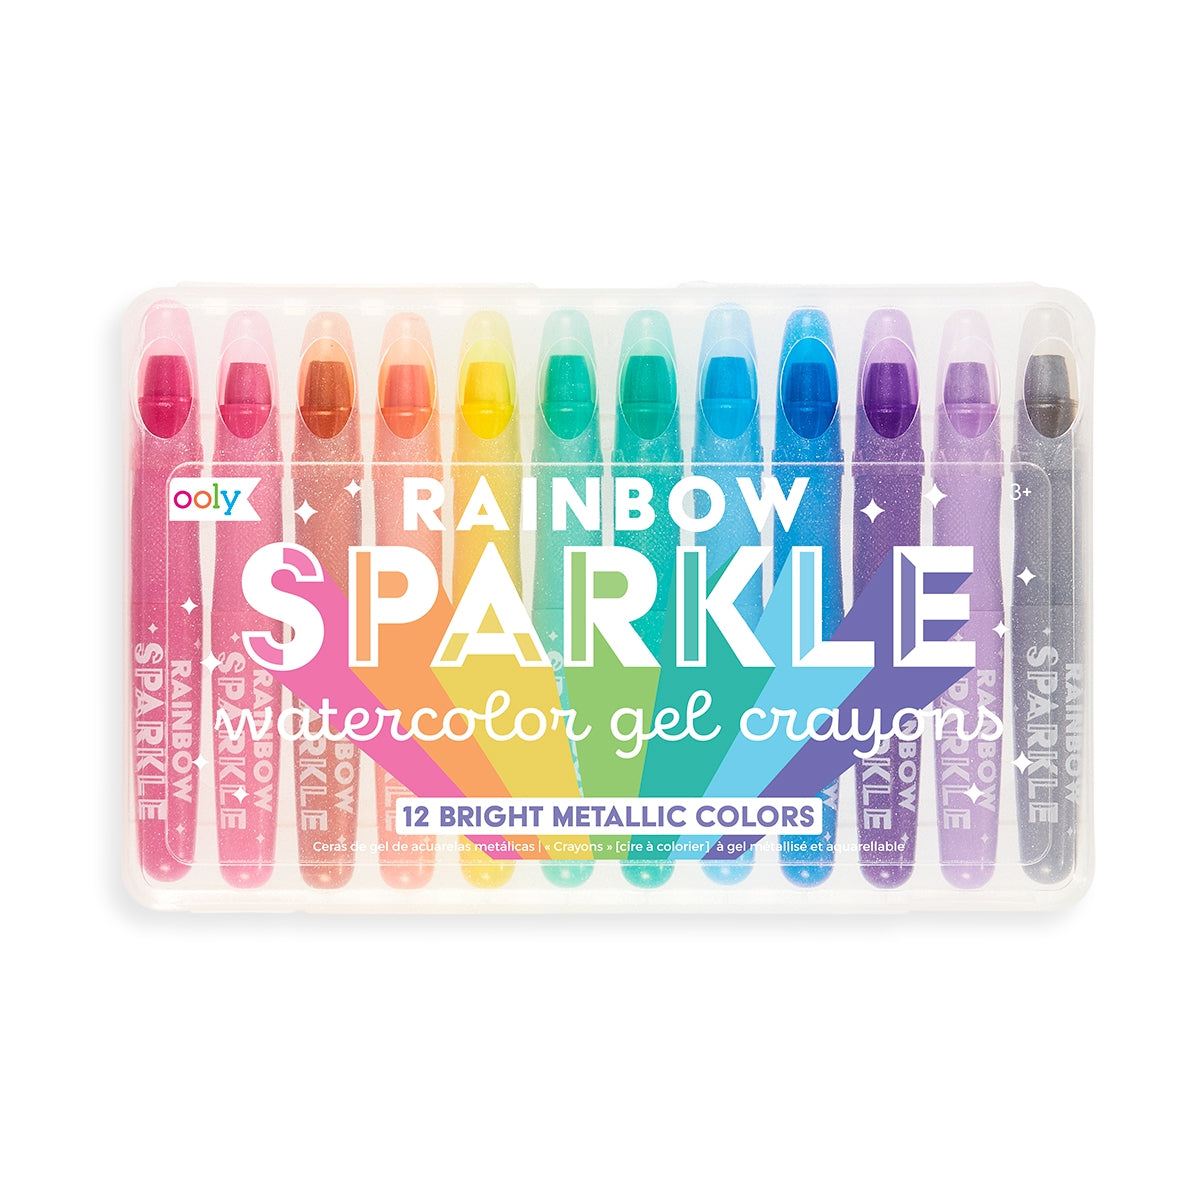 Sparkle Metallic Watercolor Gel Crayons